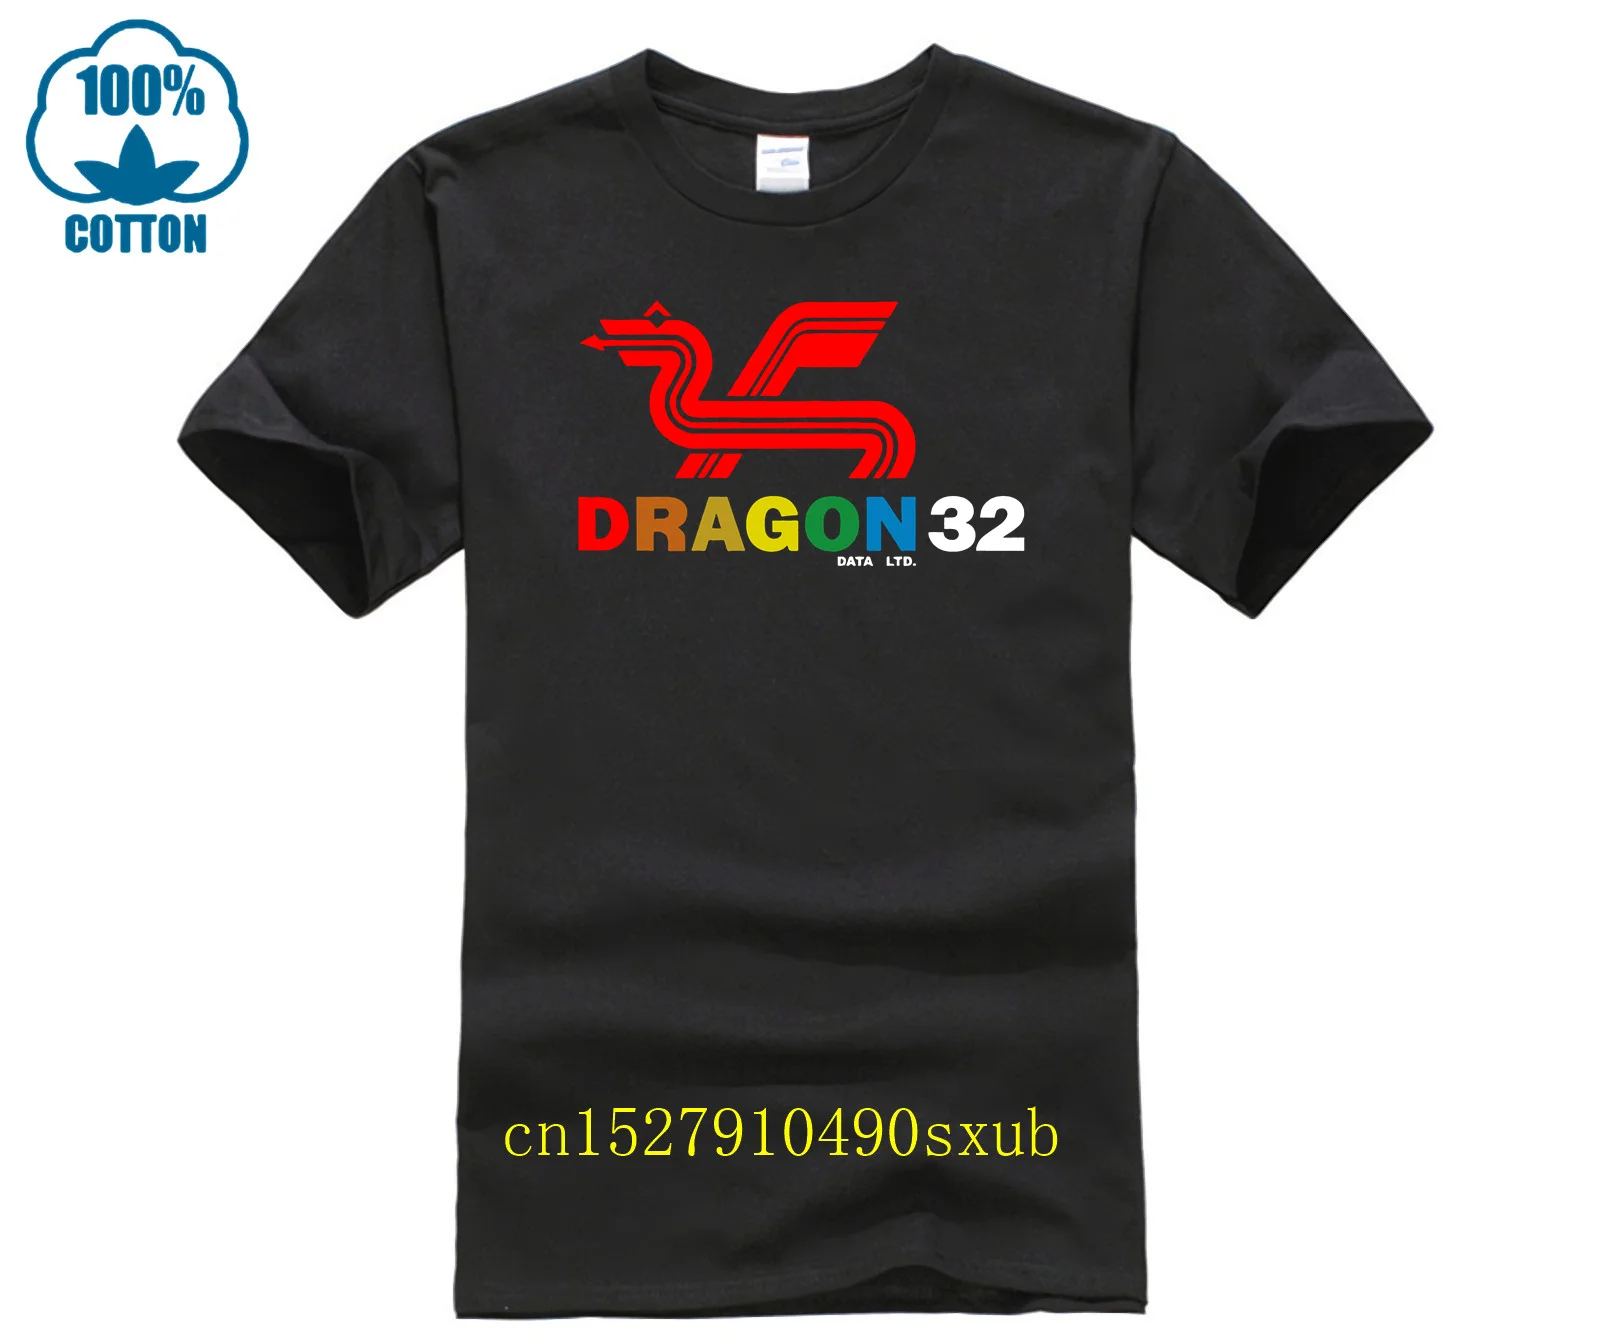 DRAGON 32 COMPUTER T SHIRT Retro 80s Video Games COMMODORE 64 Saintclaire Spectrum image_0